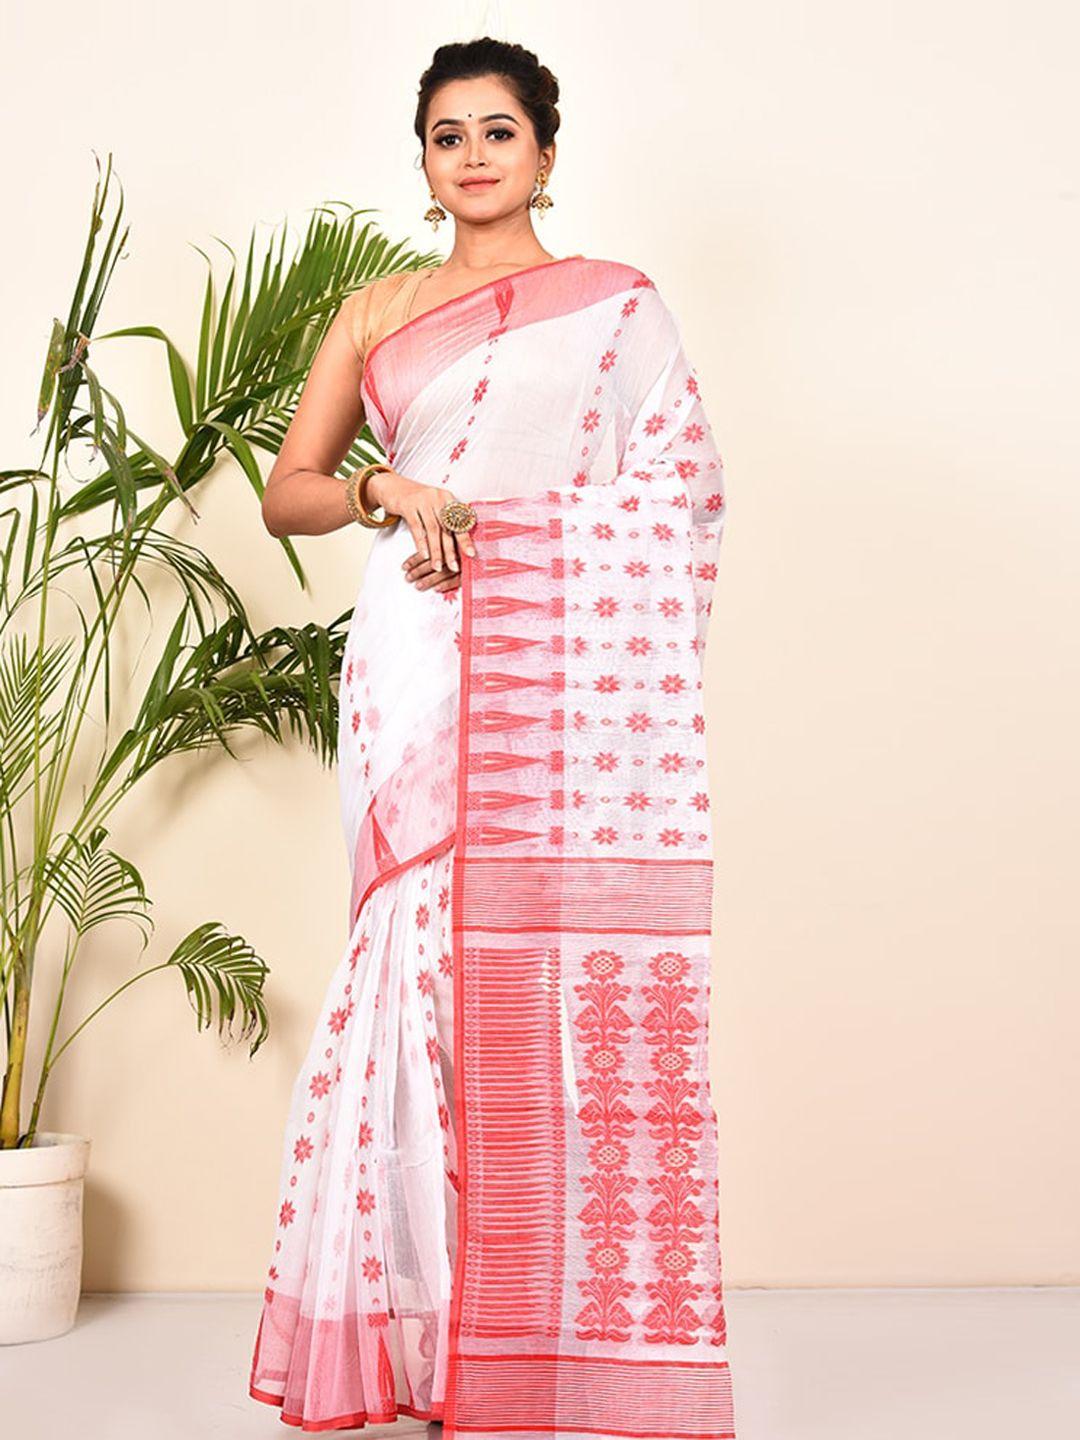 allsilks white & red ethnic motifs taant saree